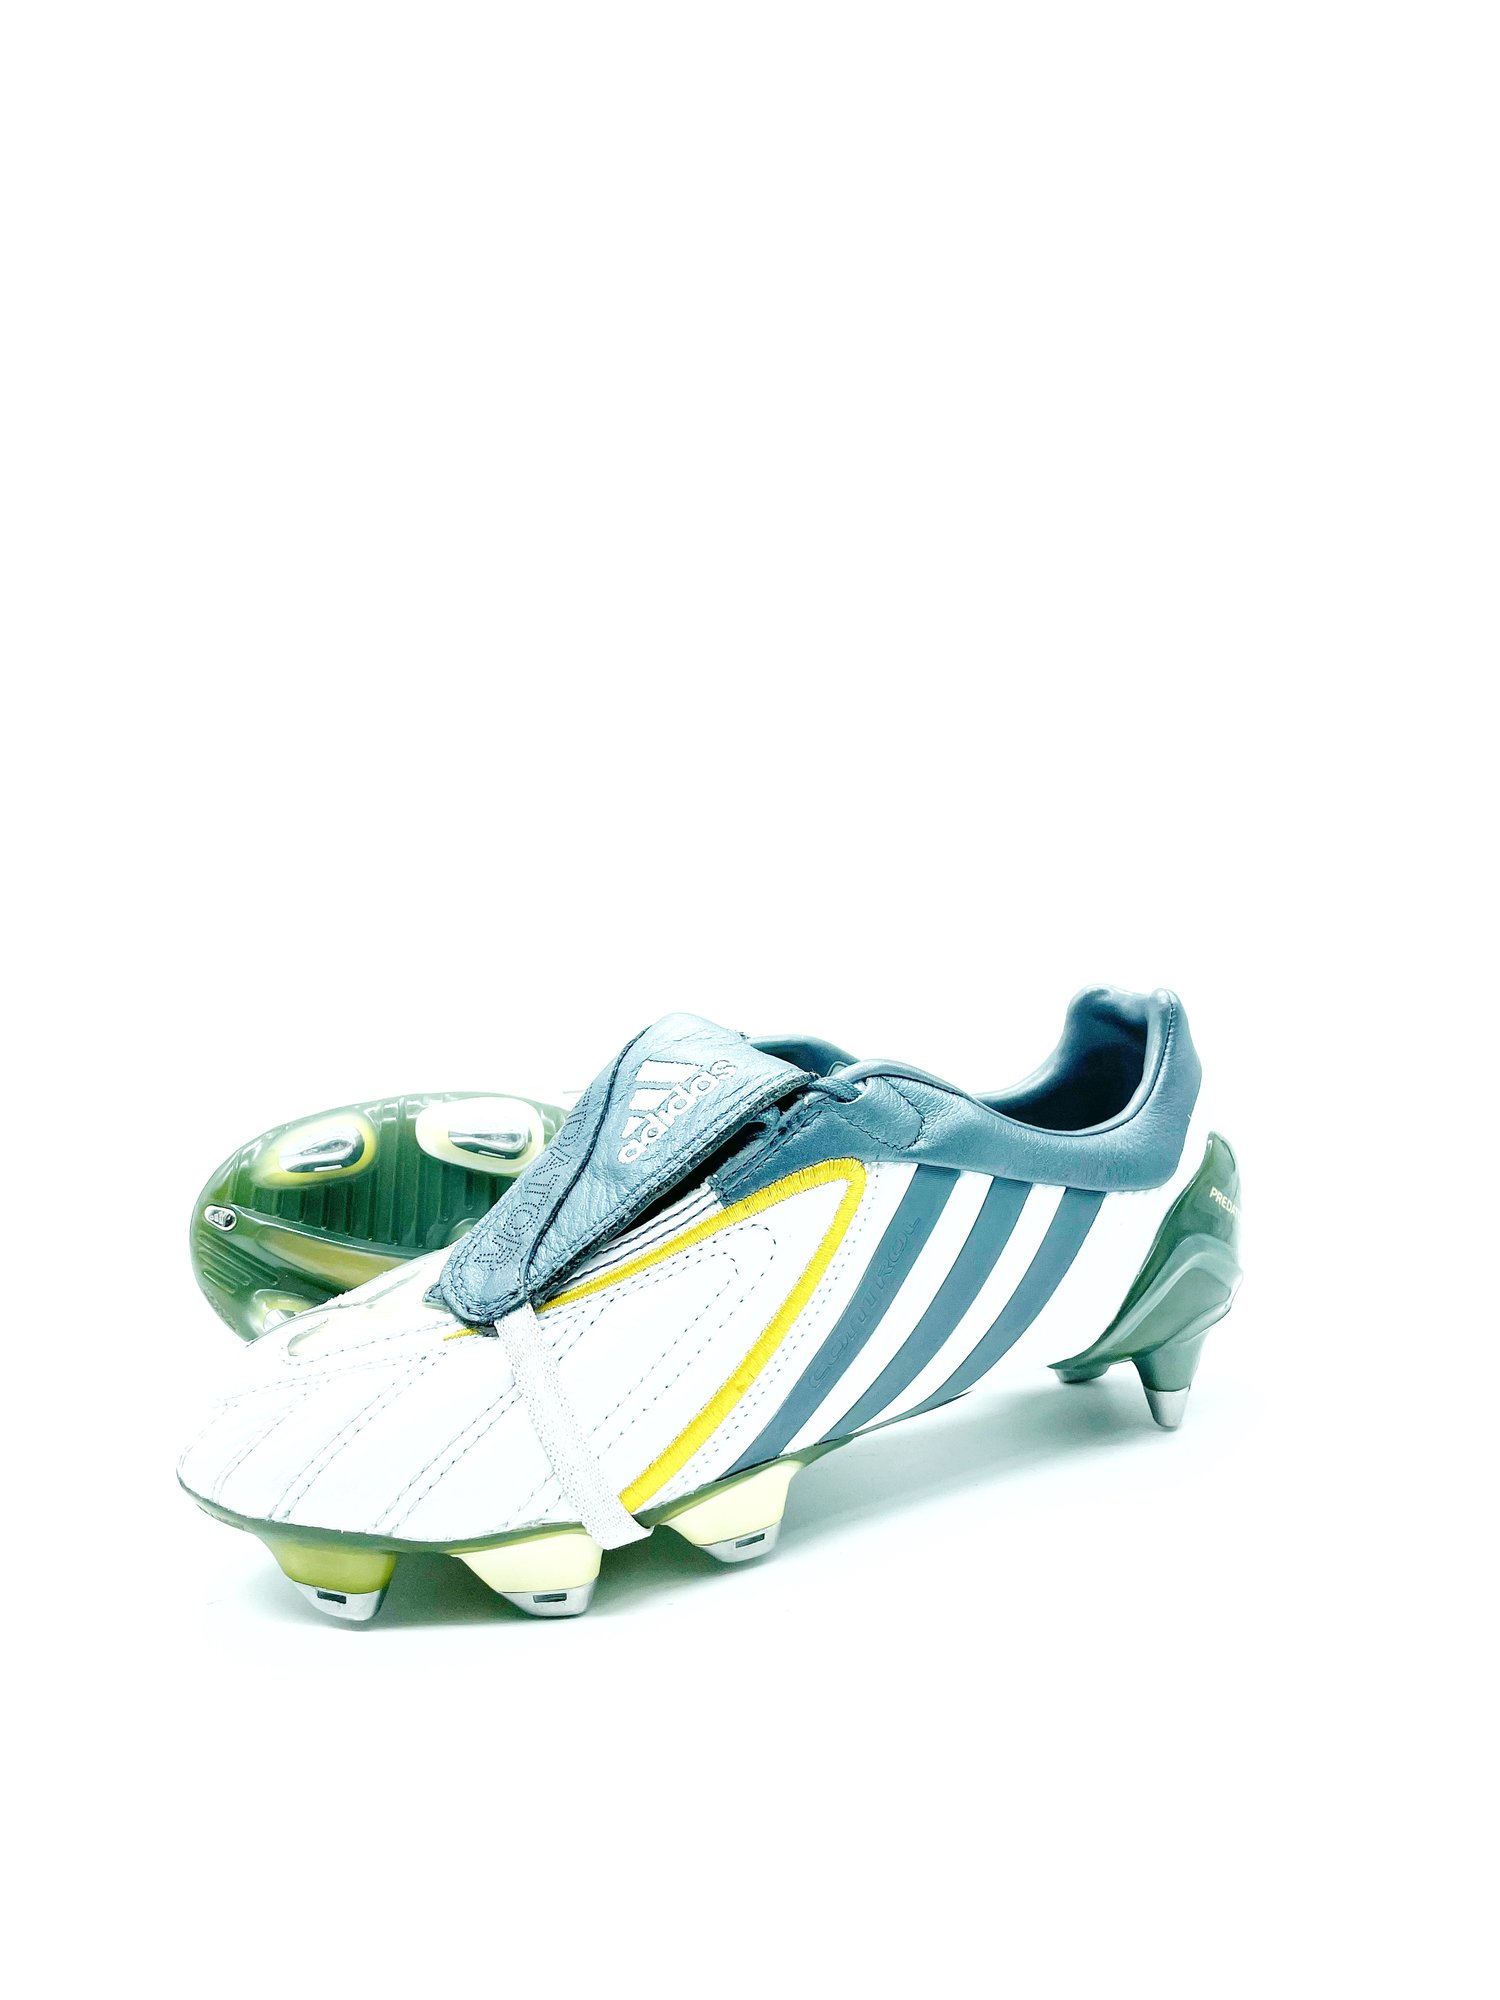 Tbtclassicfootballboots — Adidas Predator Powerswerve Sg or FG white